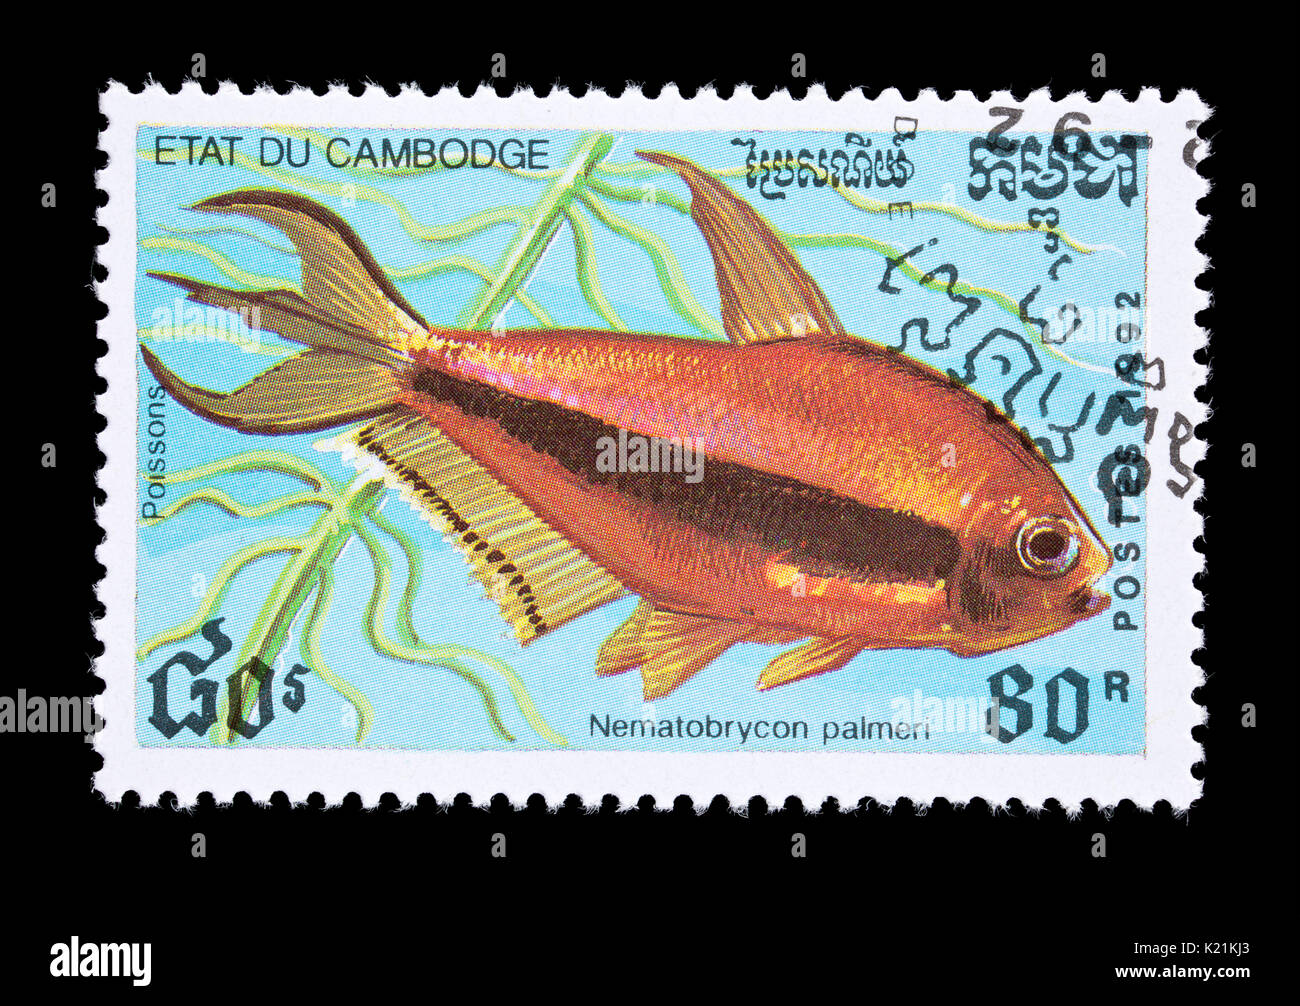 Postage stamp from Cambodia depicting a emperor tetra (Nematobrycon palmeri) Stock Photo